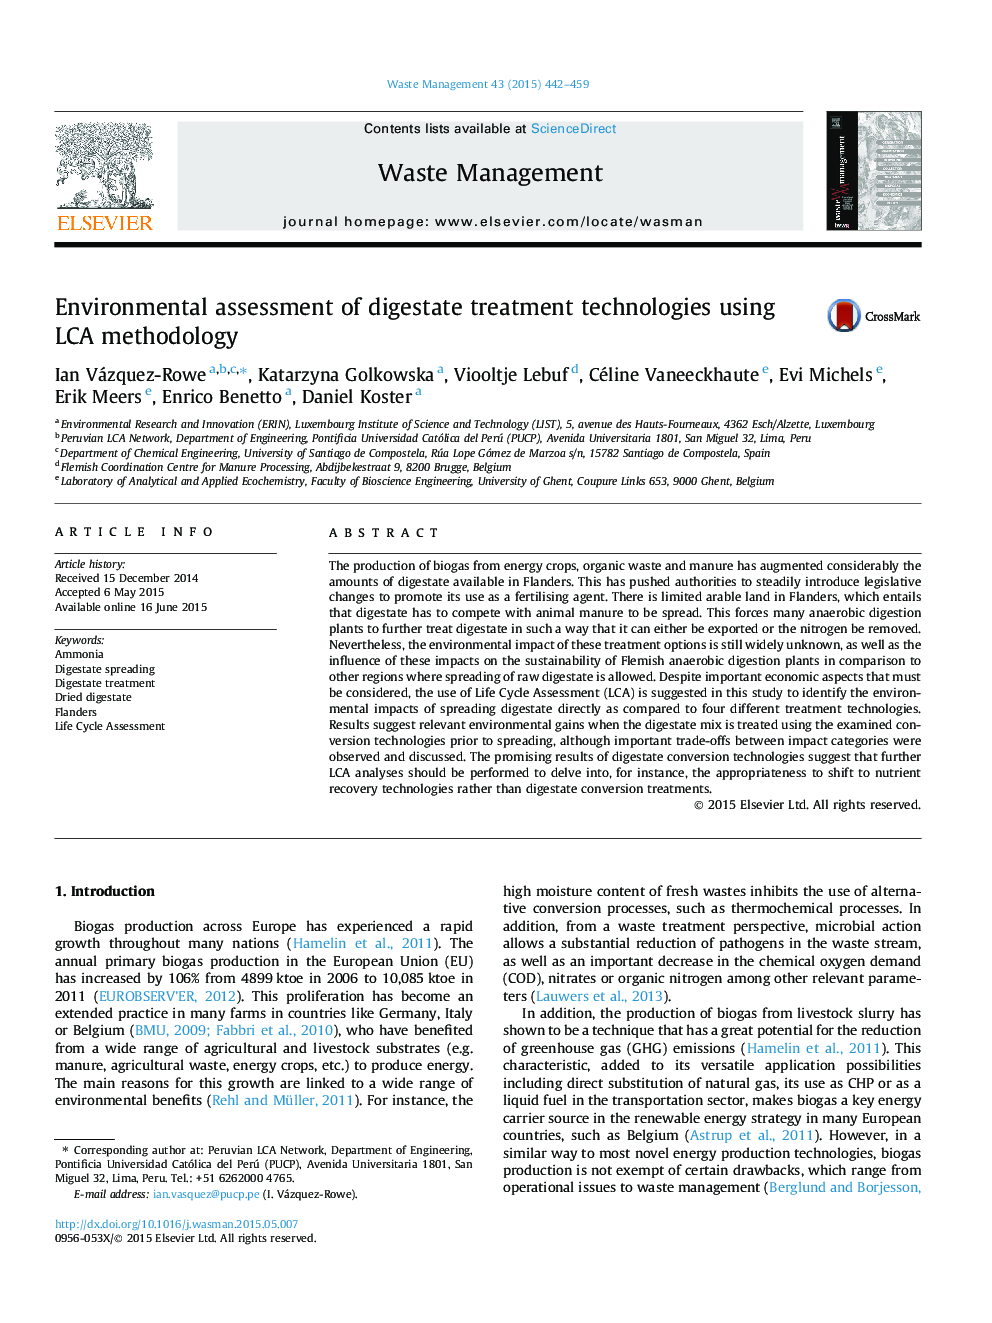 Environmental assessment of digestate treatment technologies using LCA methodology